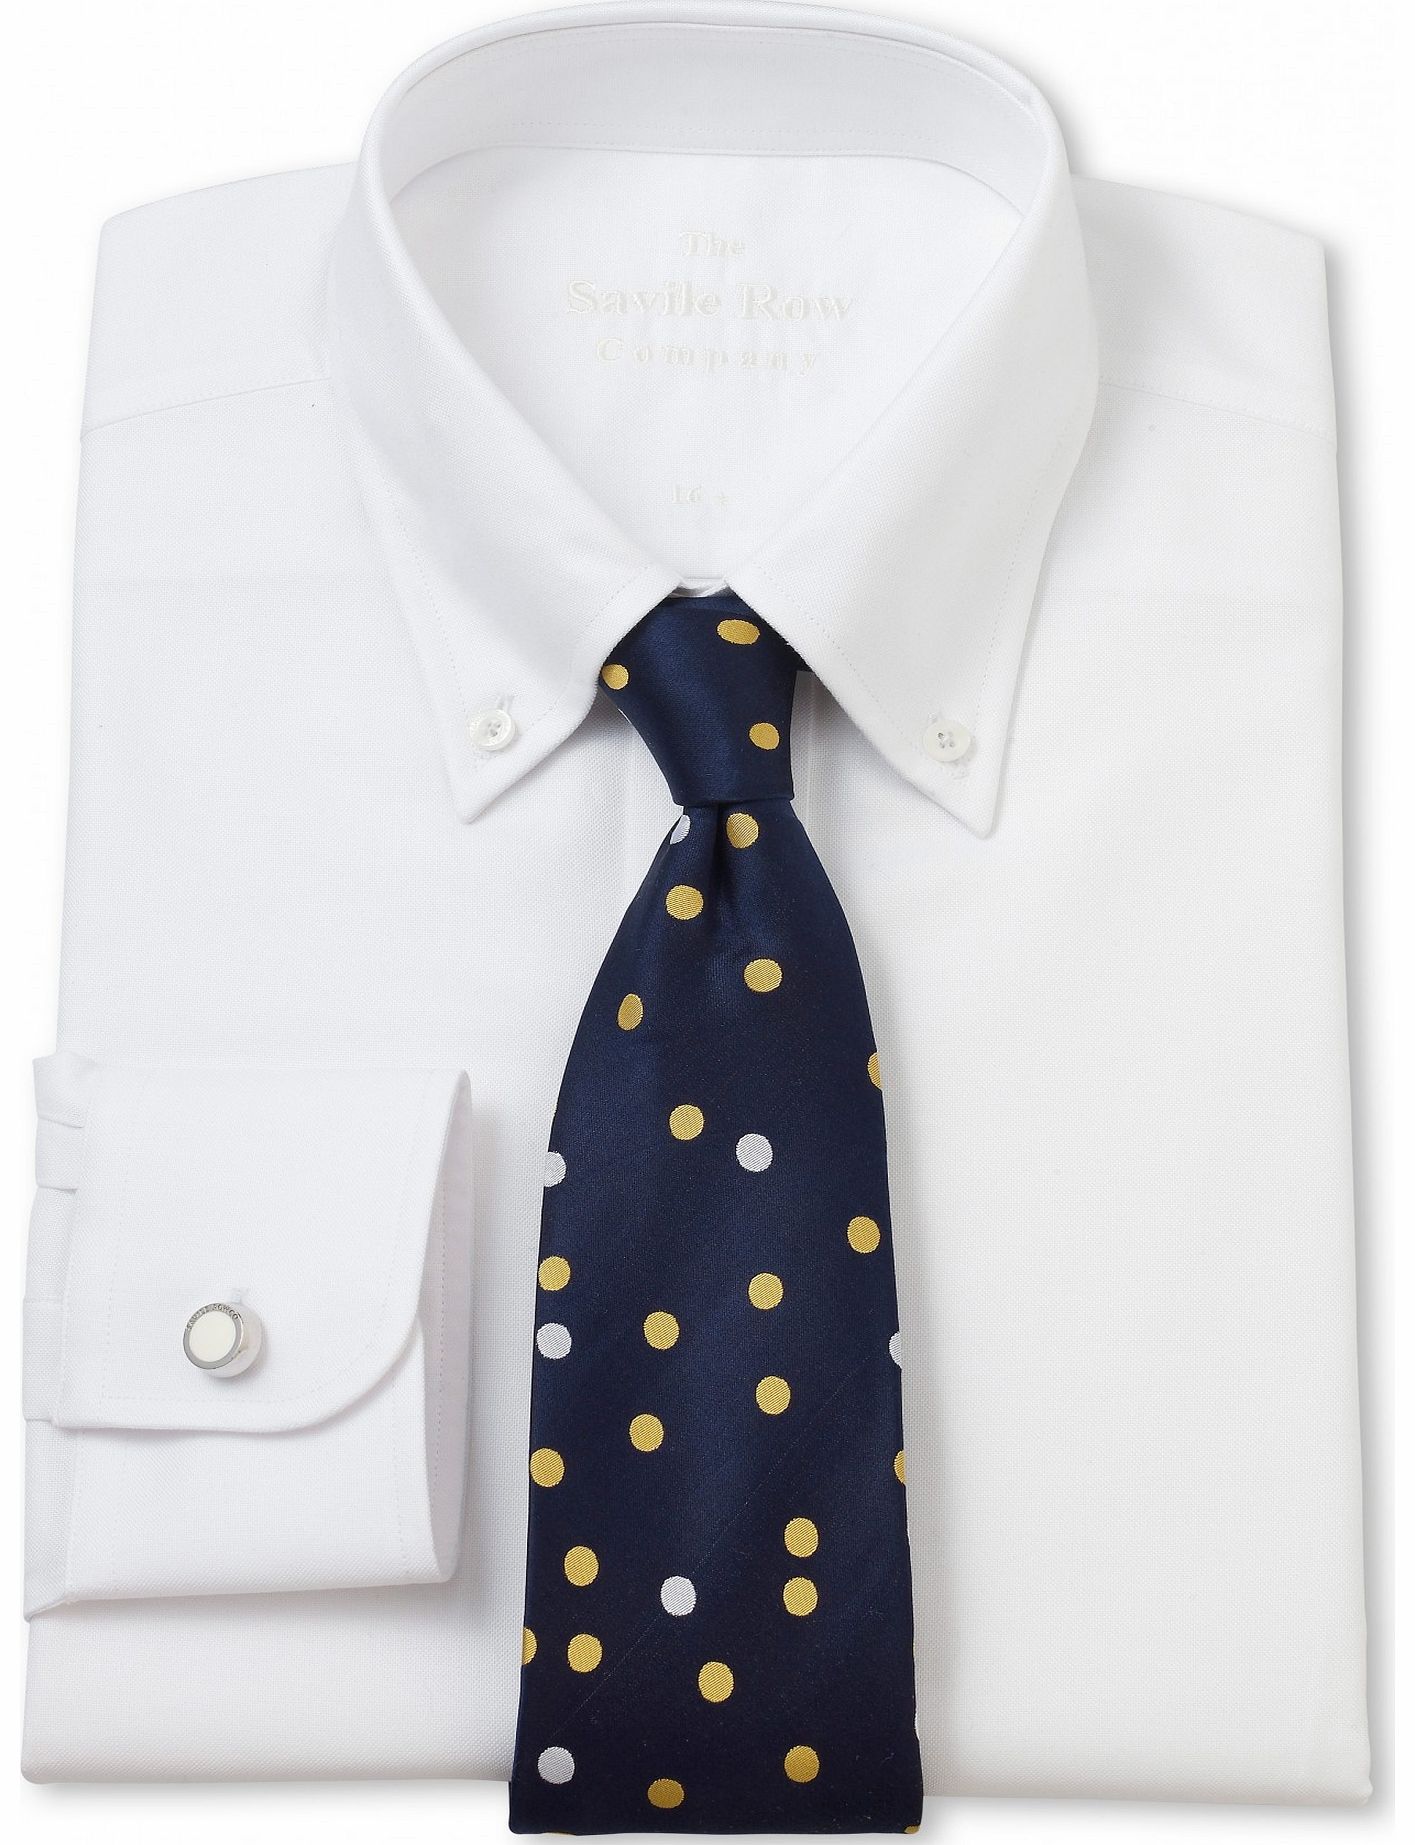 Savile Row Company White Oxford Button Down Slim Fit Shirt 16``